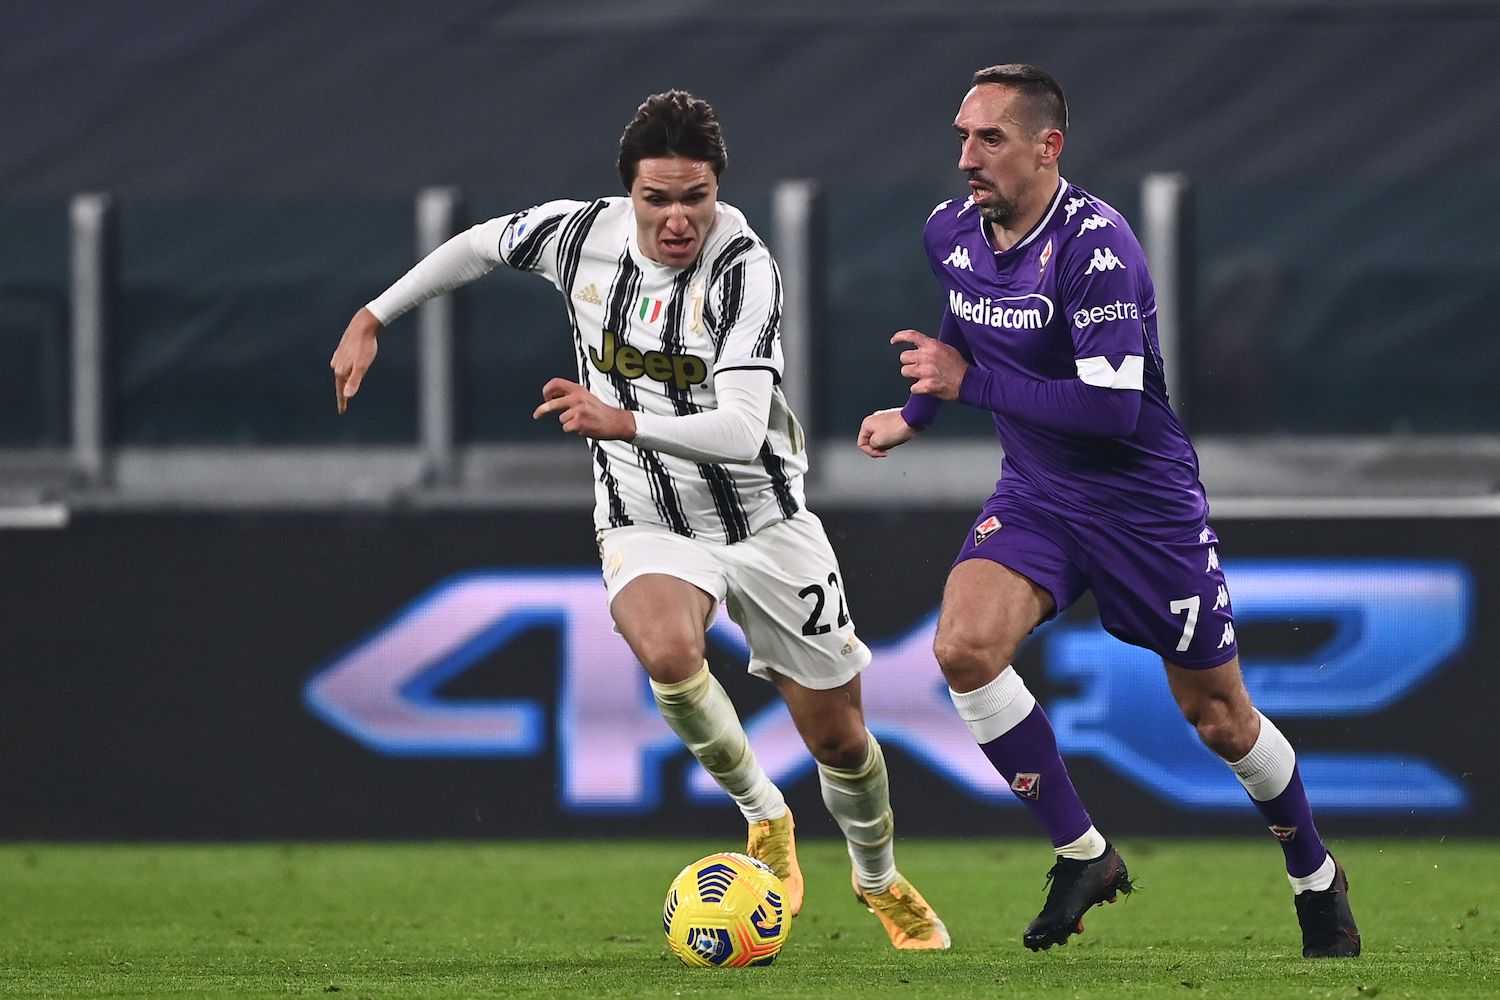 Juventus-Fiorentina. La fotogallery del 22 dicembre 2020